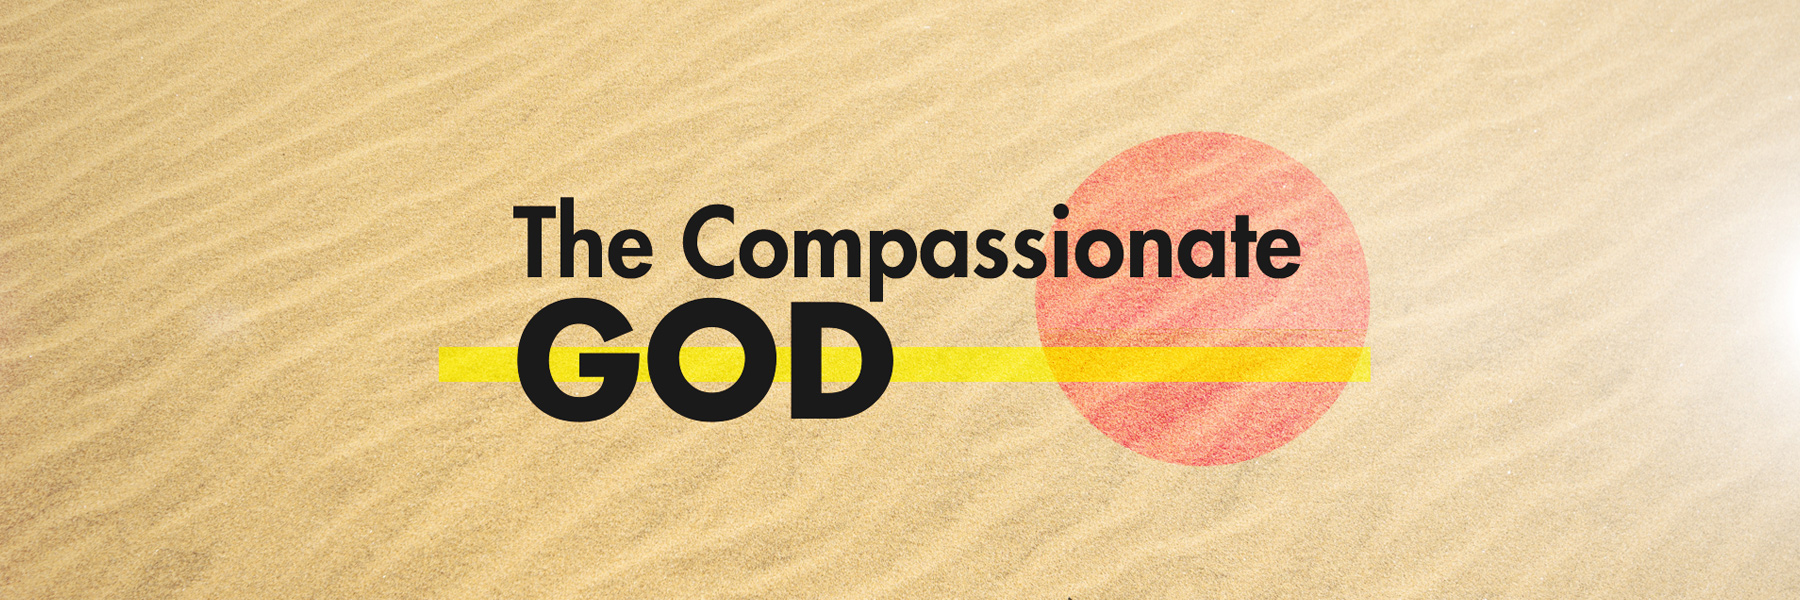 The Compassionate God